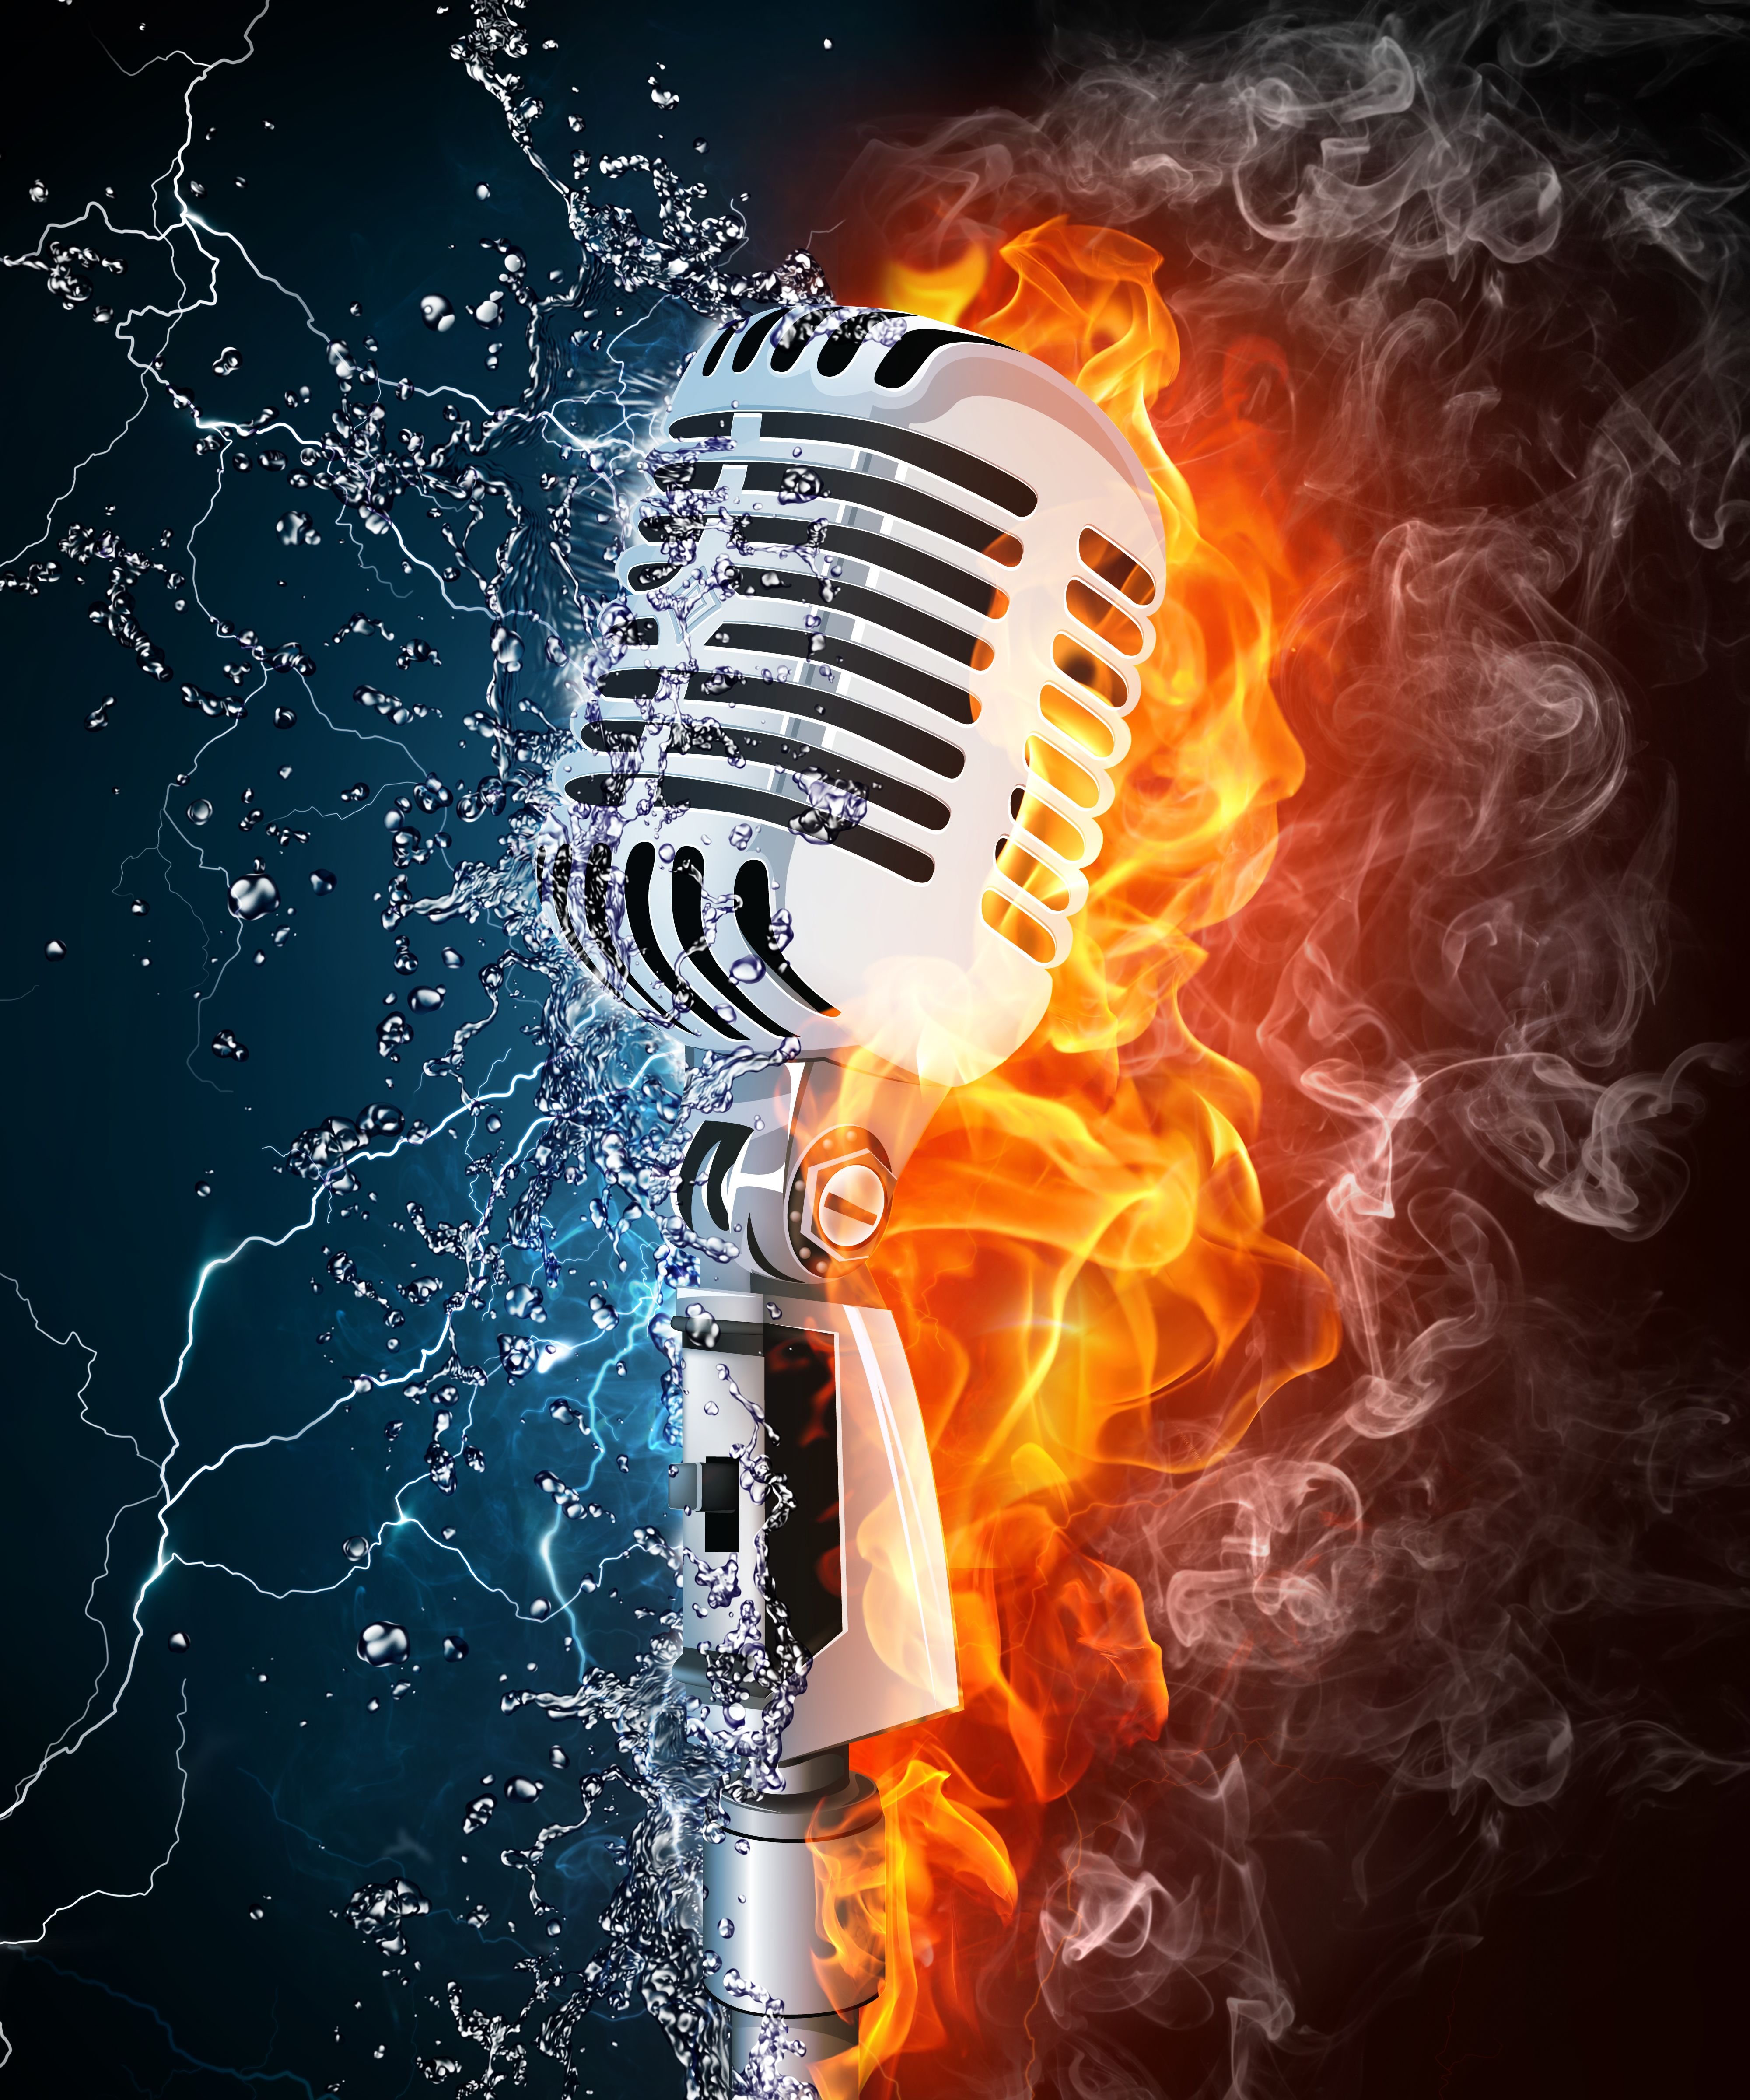 Karaoke music. Микрофон. Микрофон красивый. Микрофон картинка. Микрофон в огне.